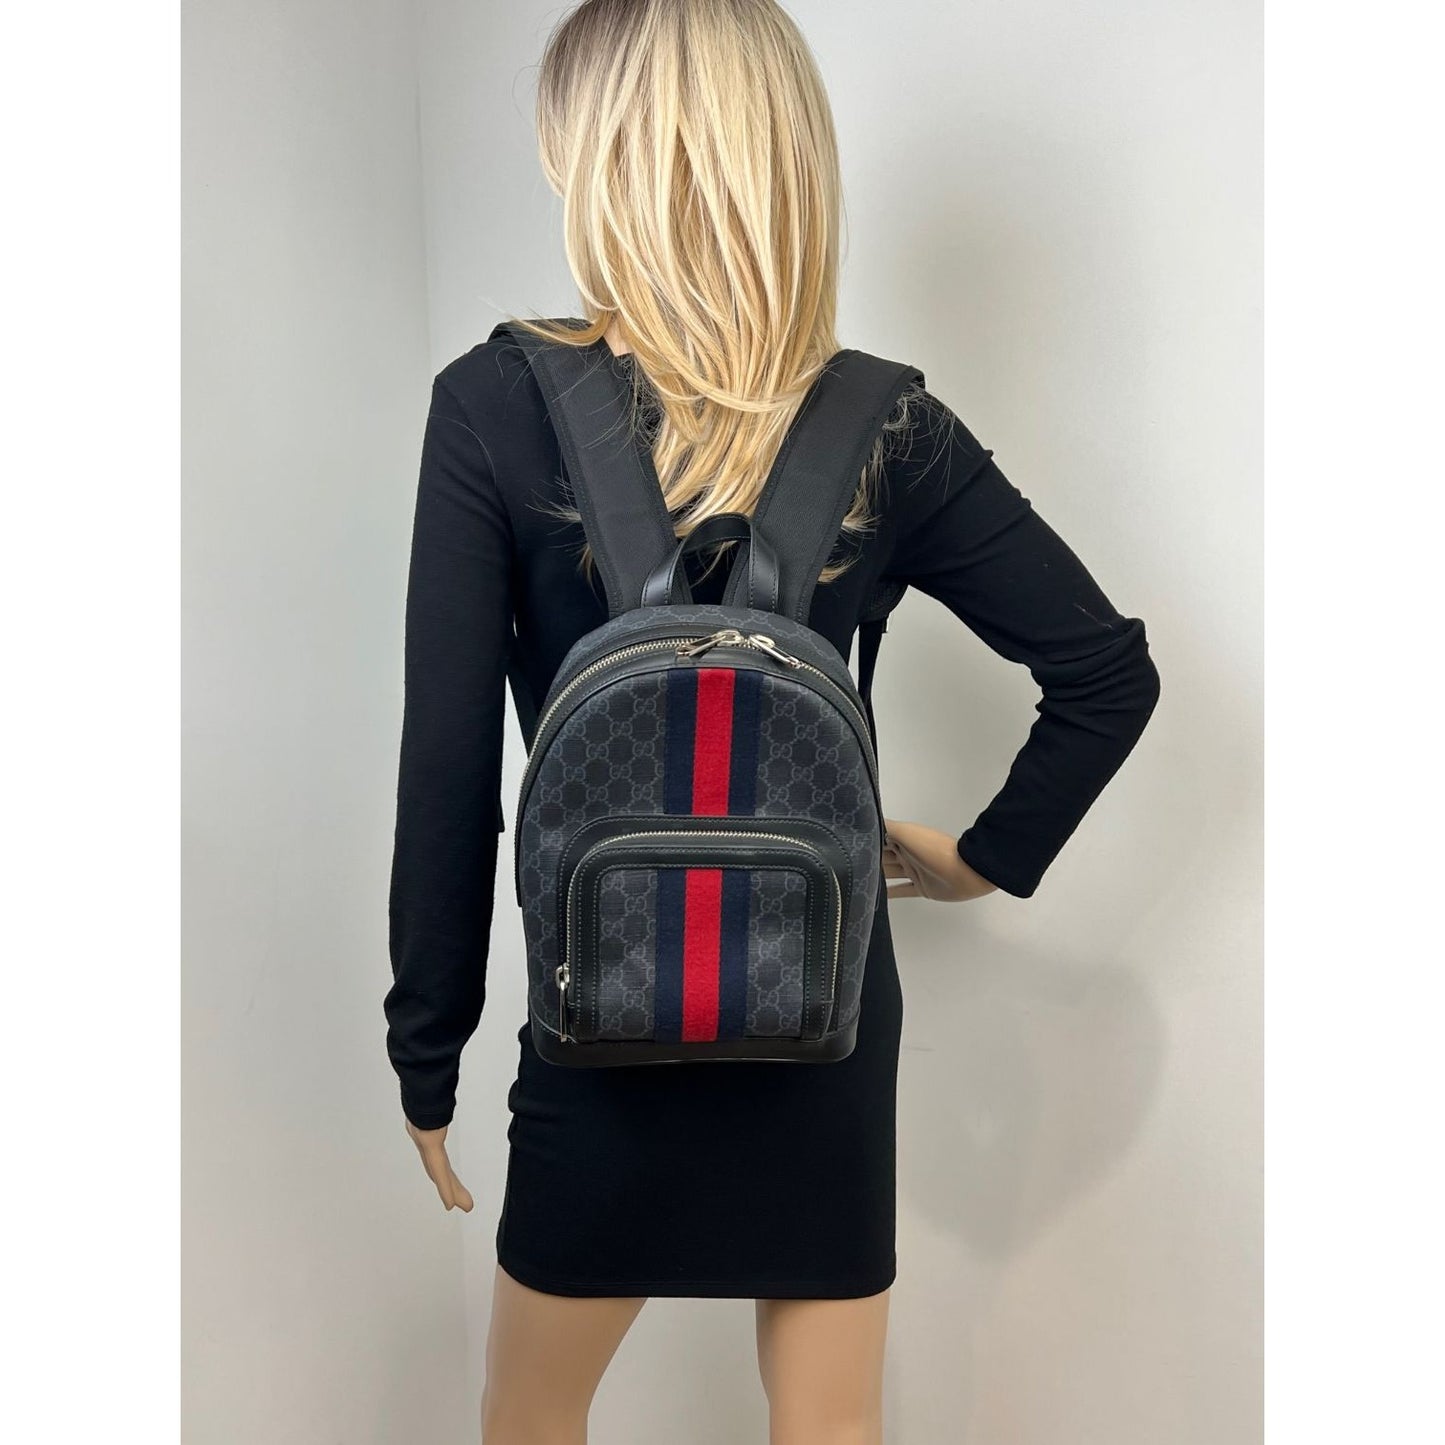 Gucci GG Supreme Monogram Web Small Backpack in Black